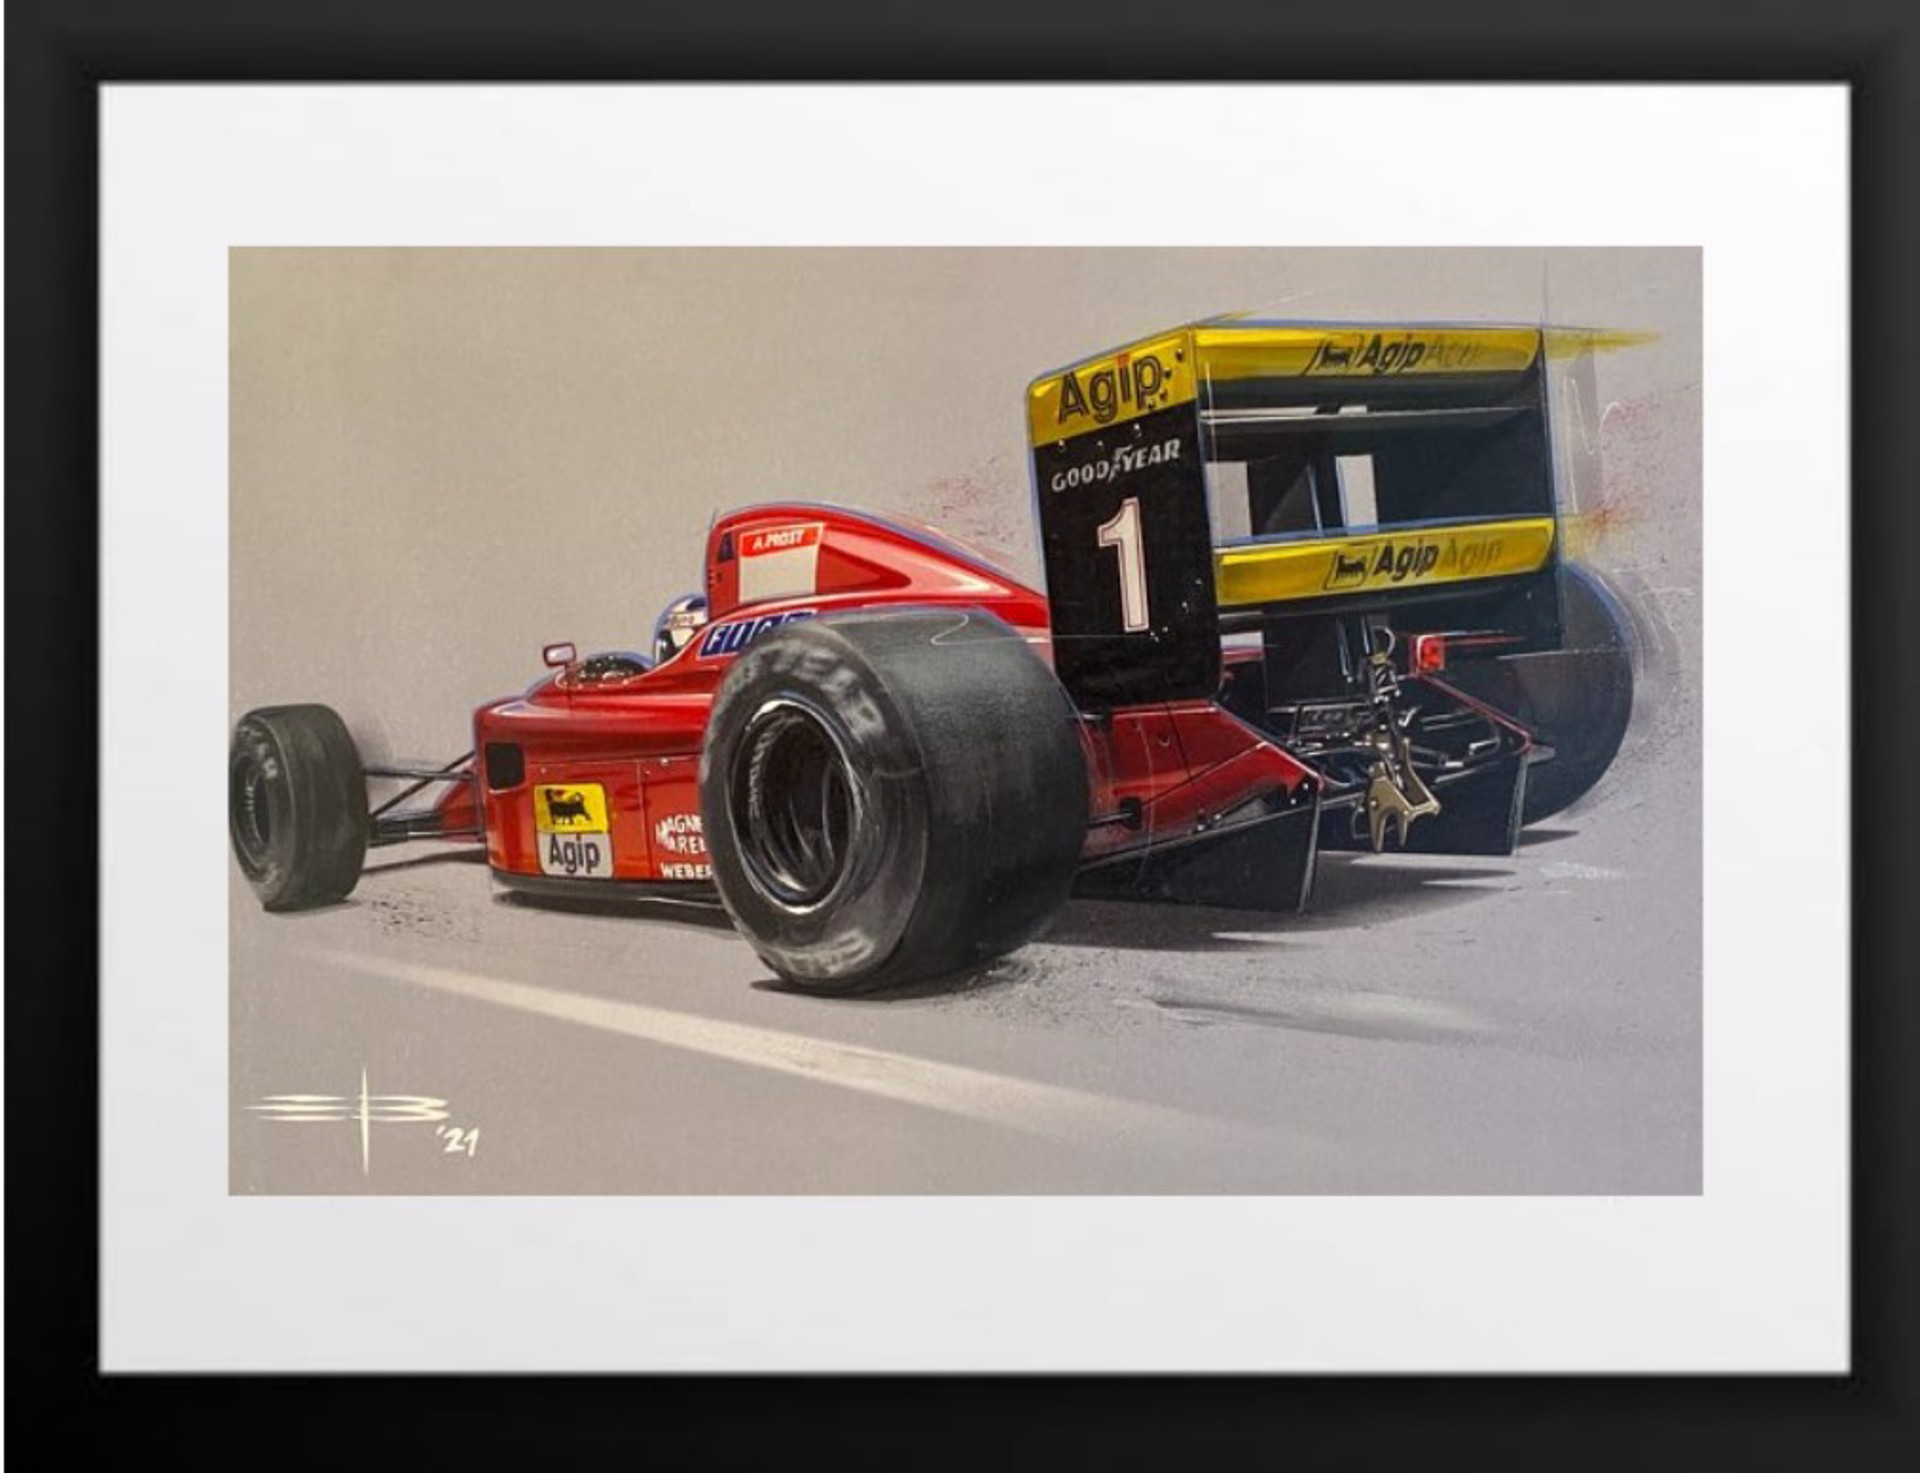 "Formula 1 Fiat" by Emile Bouret